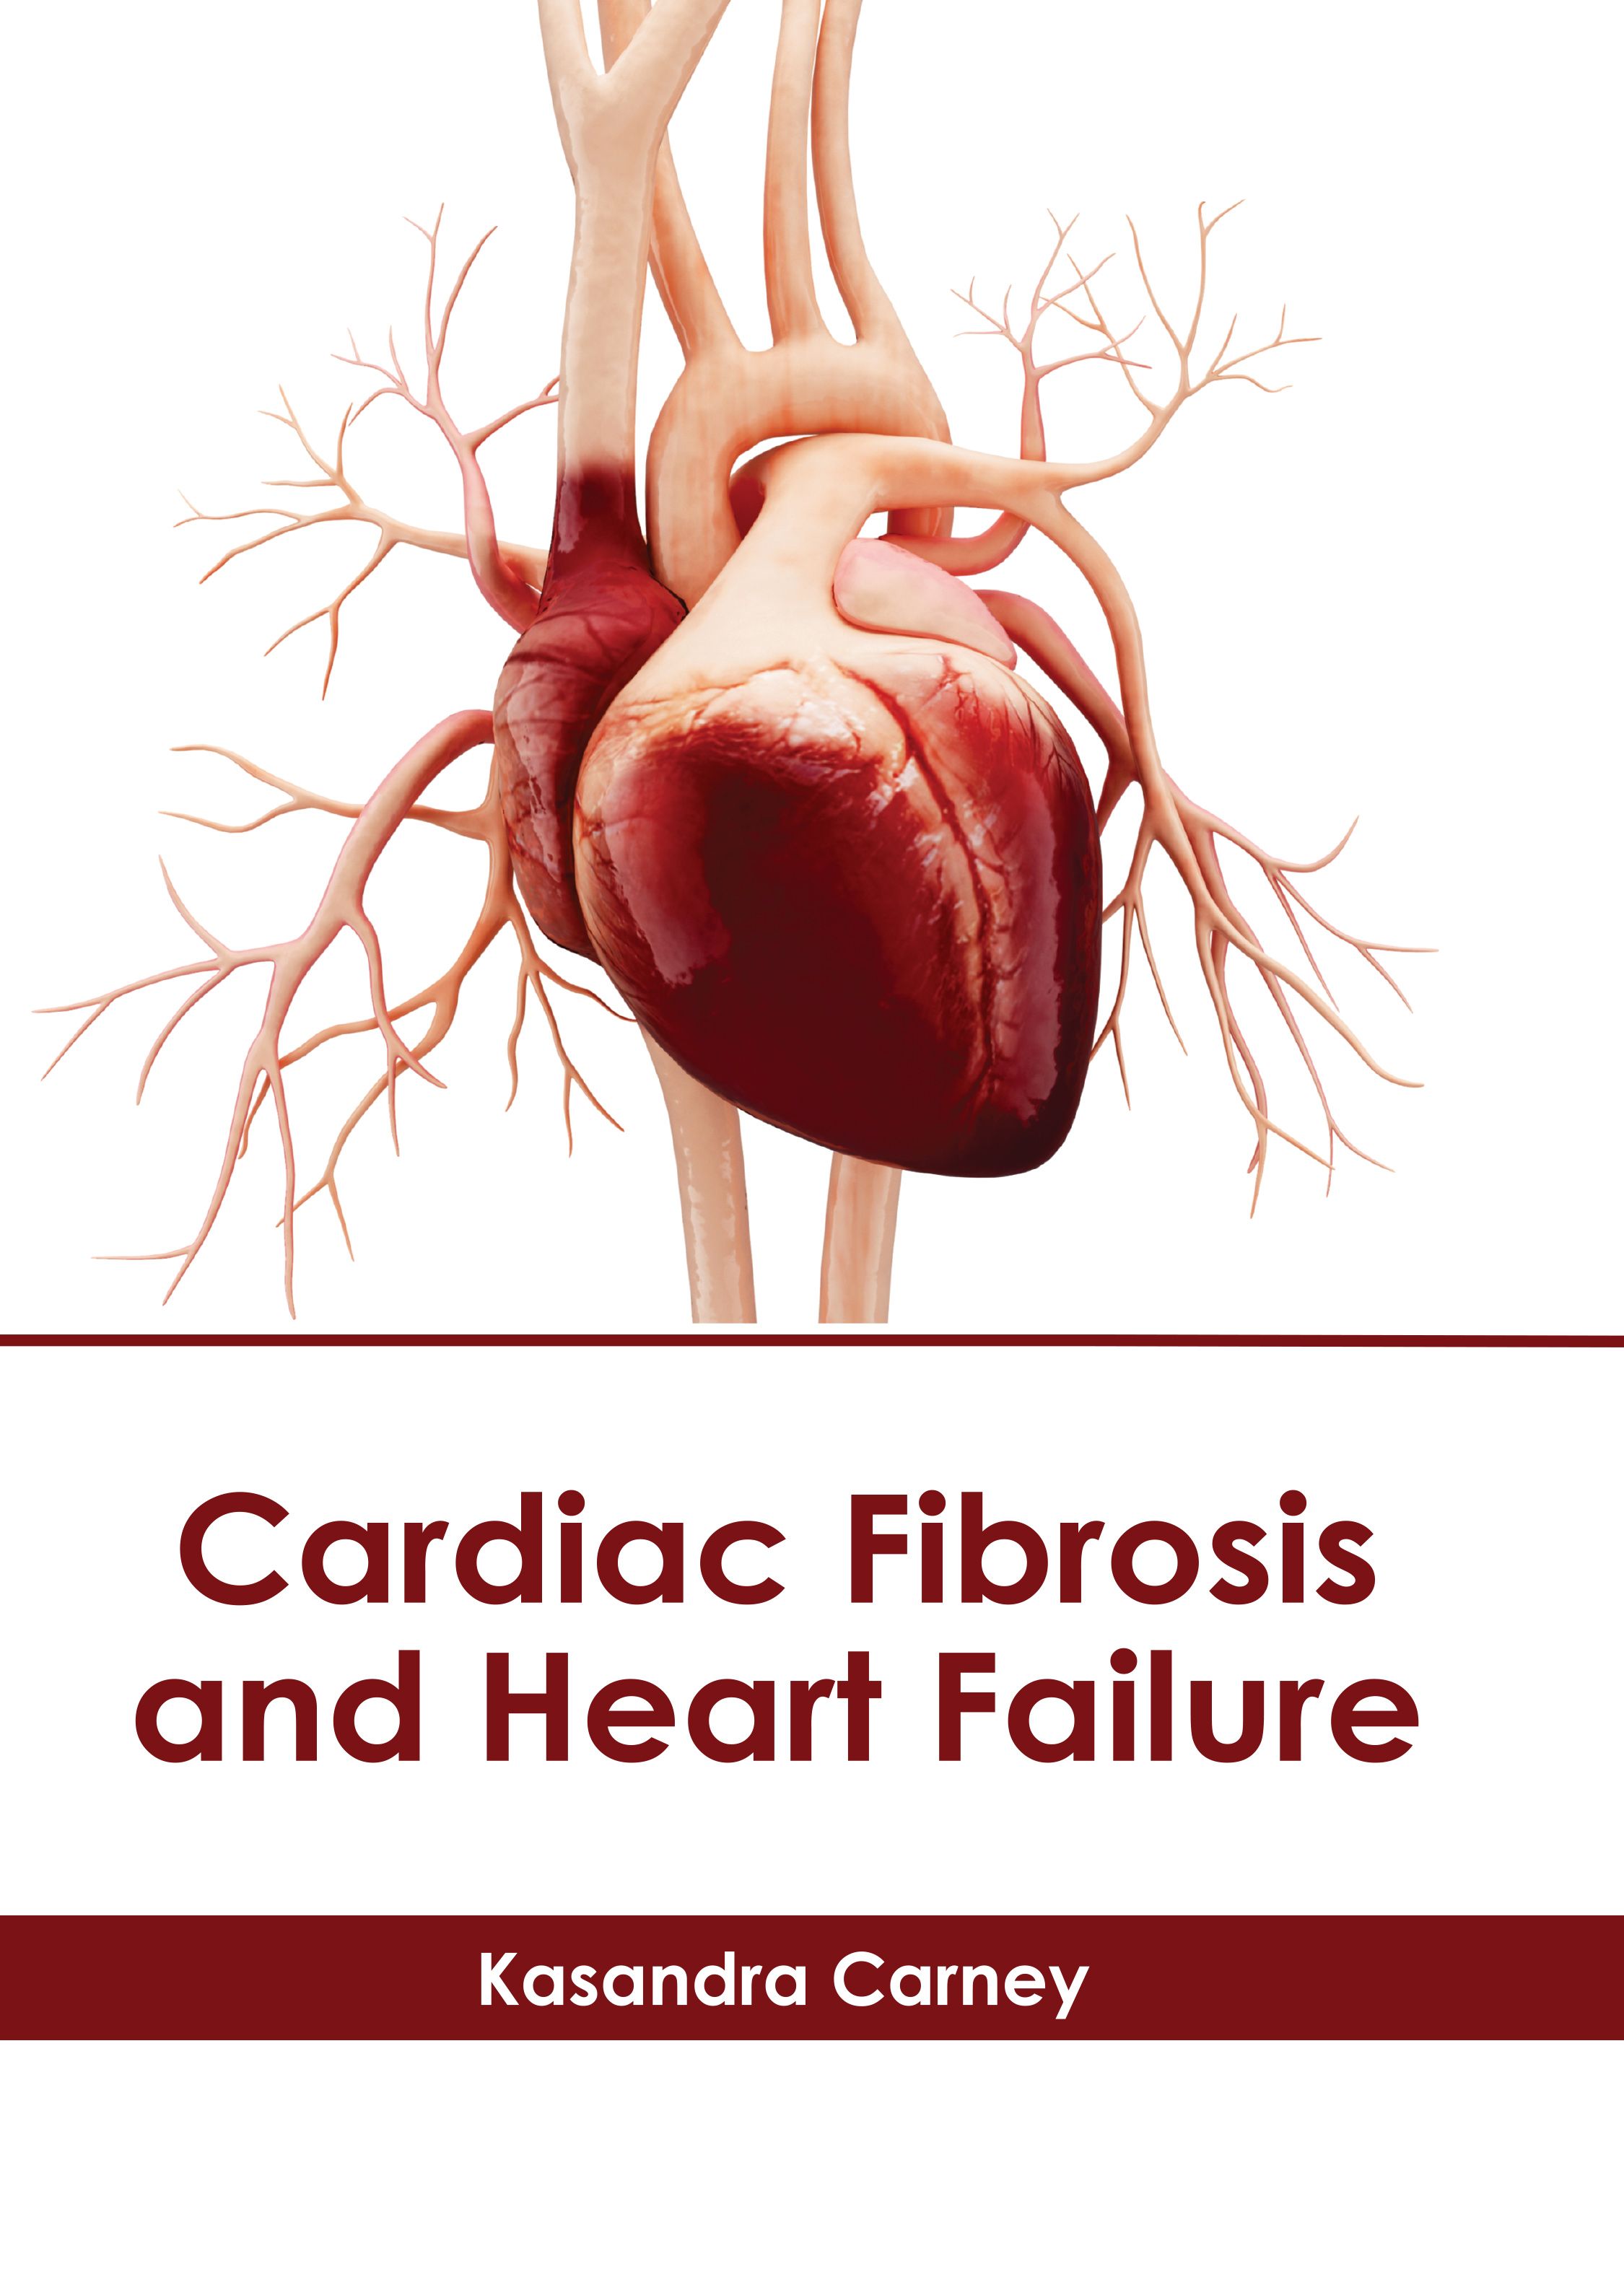 CARDIAC FIBROSIS AND HEART FAILURE